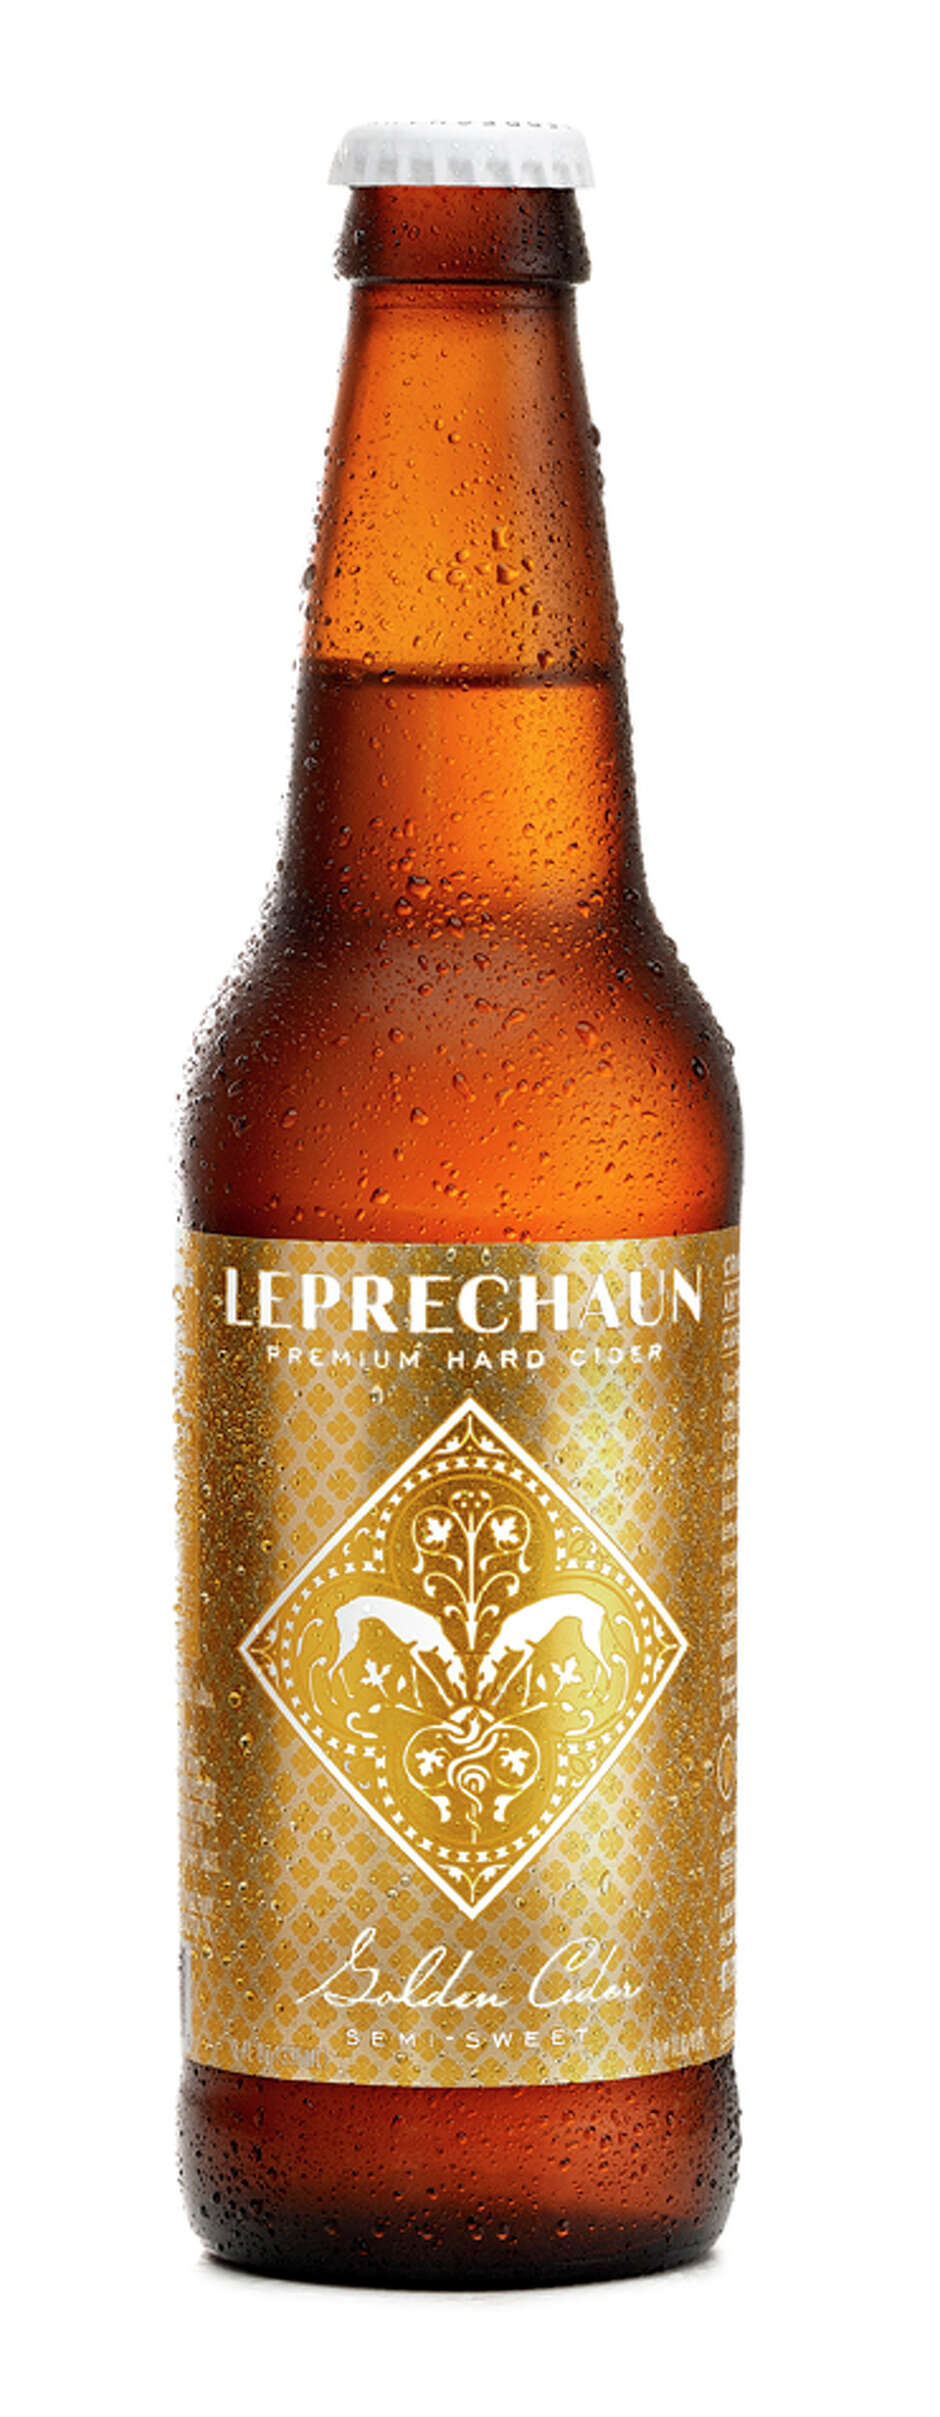 Houston Leprechaun cider company relaunches brand with vigor ...